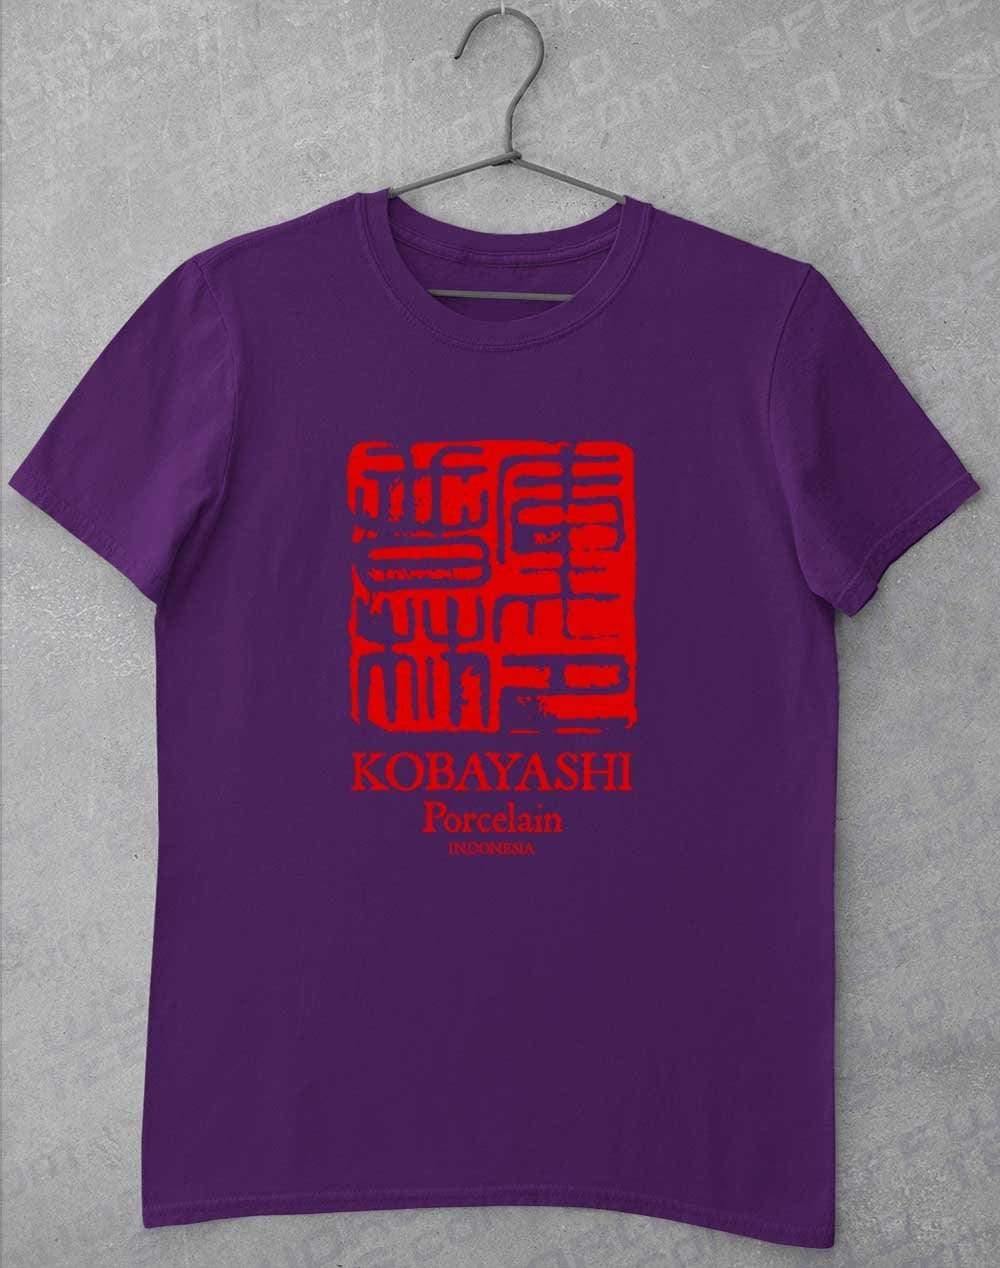 Kobayashi Porcelain T-Shirt S / Purple  - Off World Tees